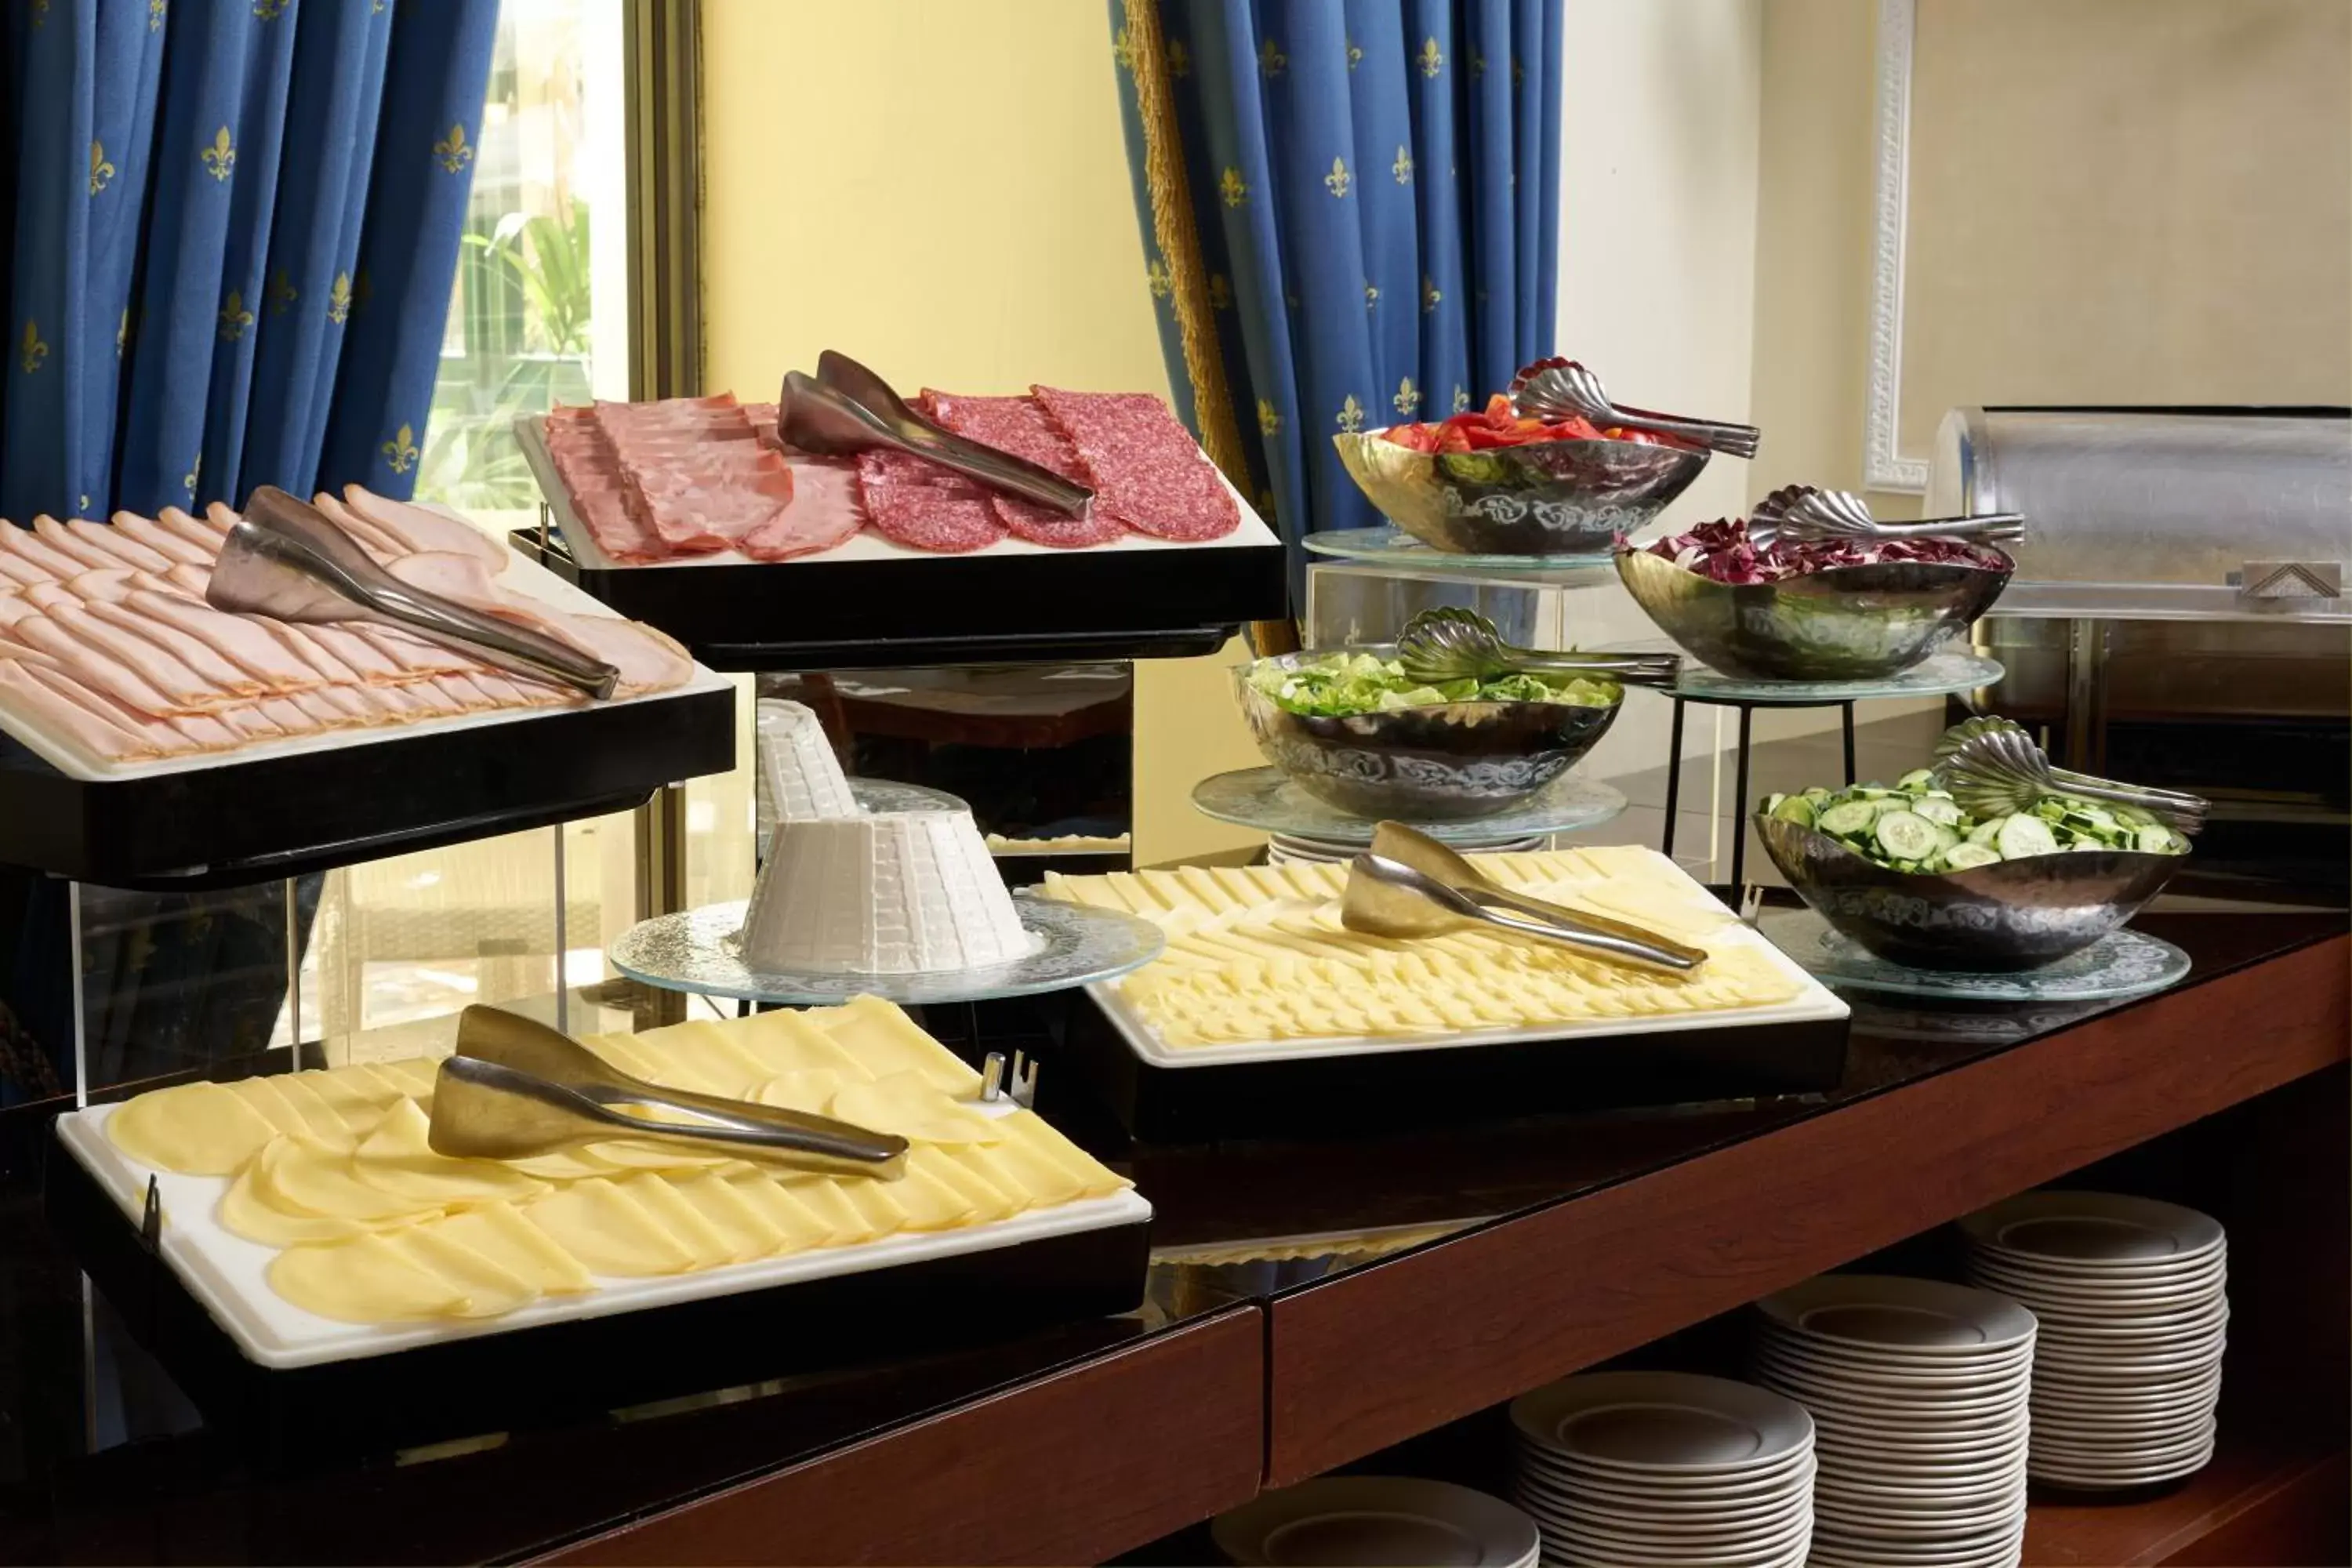 Buffet breakfast in Hotel Quirinale